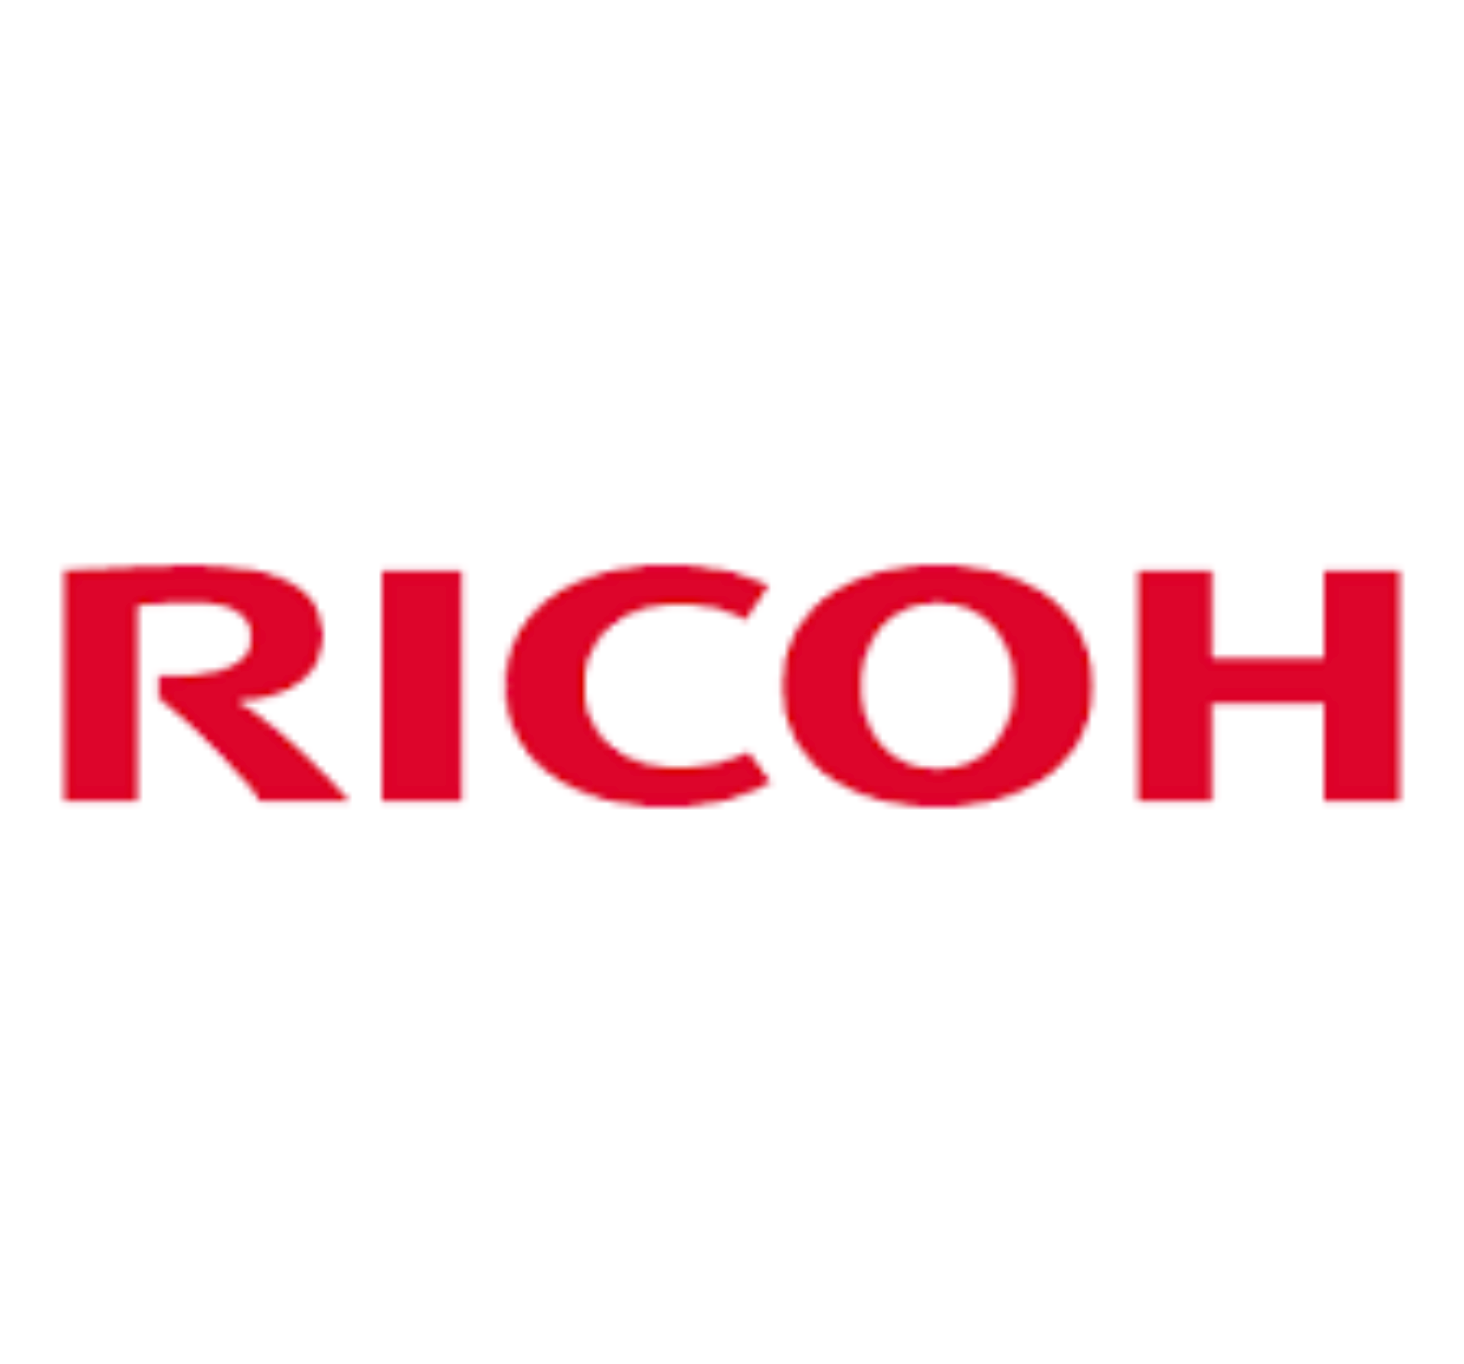 Ricoh Ri100 Direct to Garment Printer | Ricoh